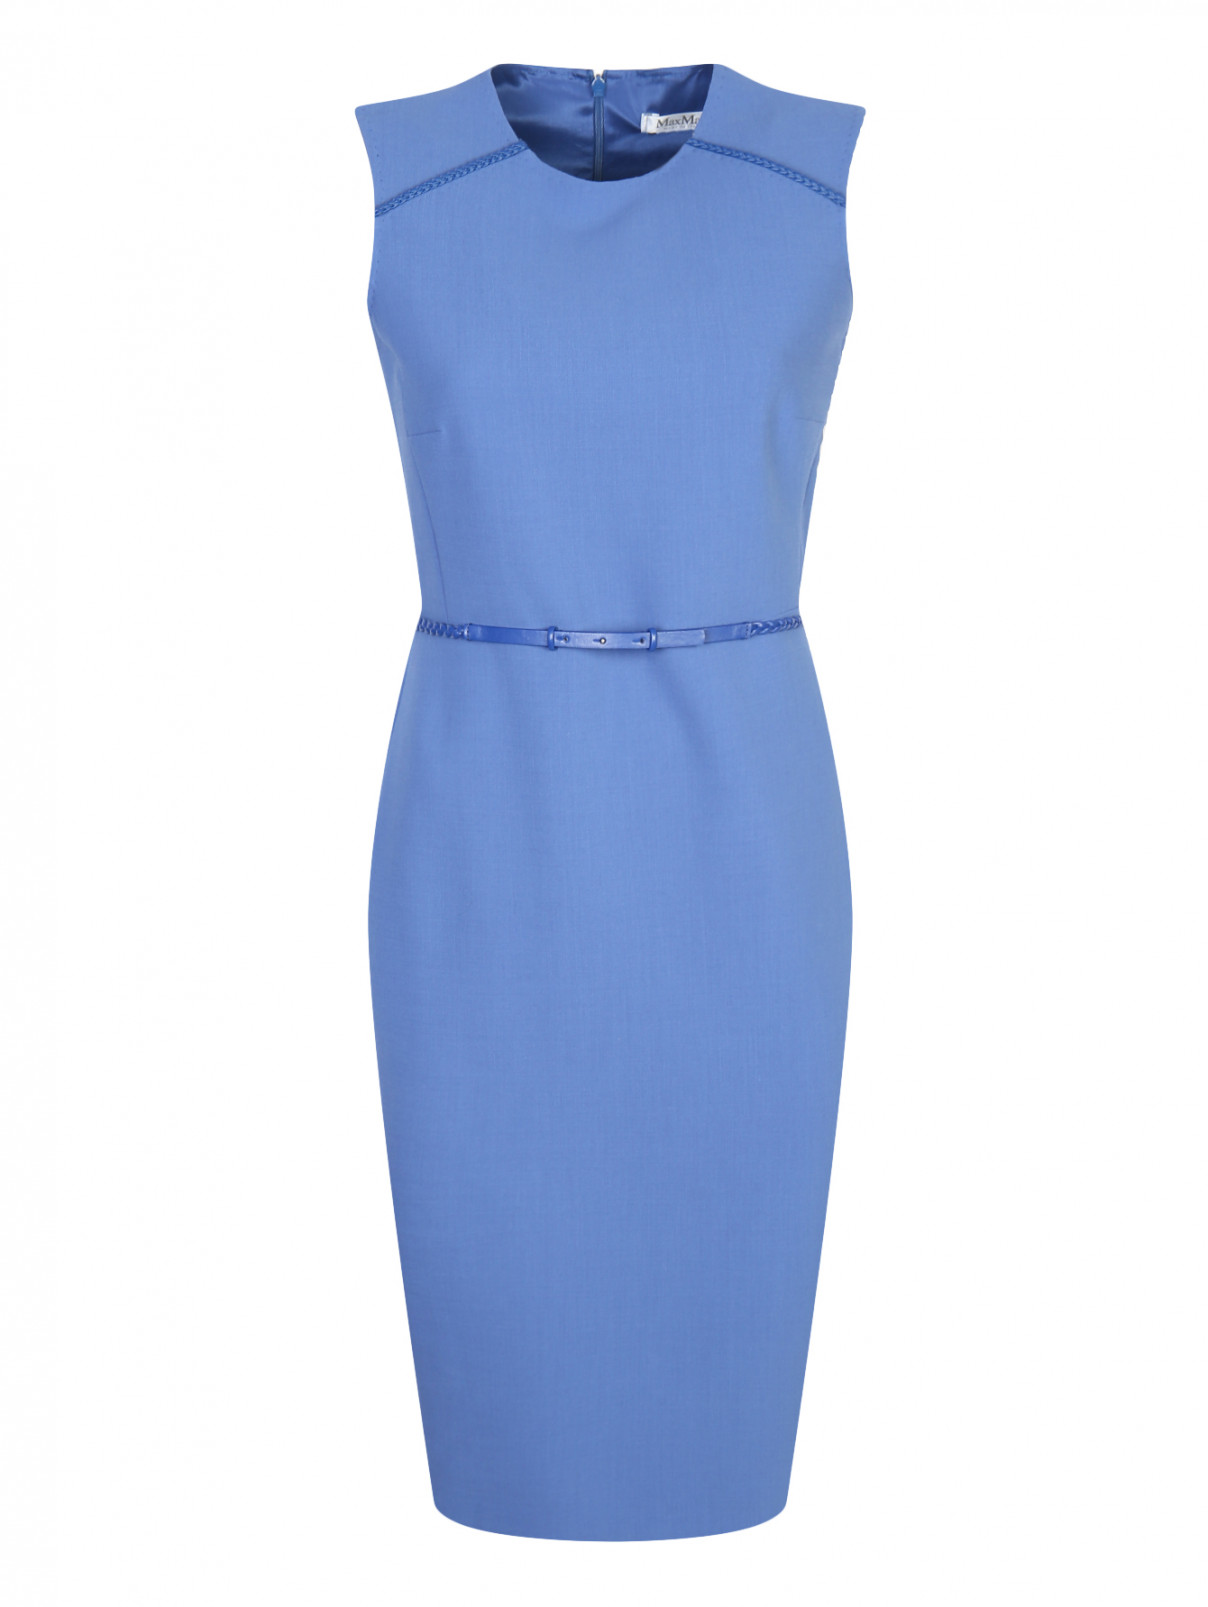 Платье-футляр из шерсти без рукавов Max Mara  –  Общий вид  – Цвет:  Синий